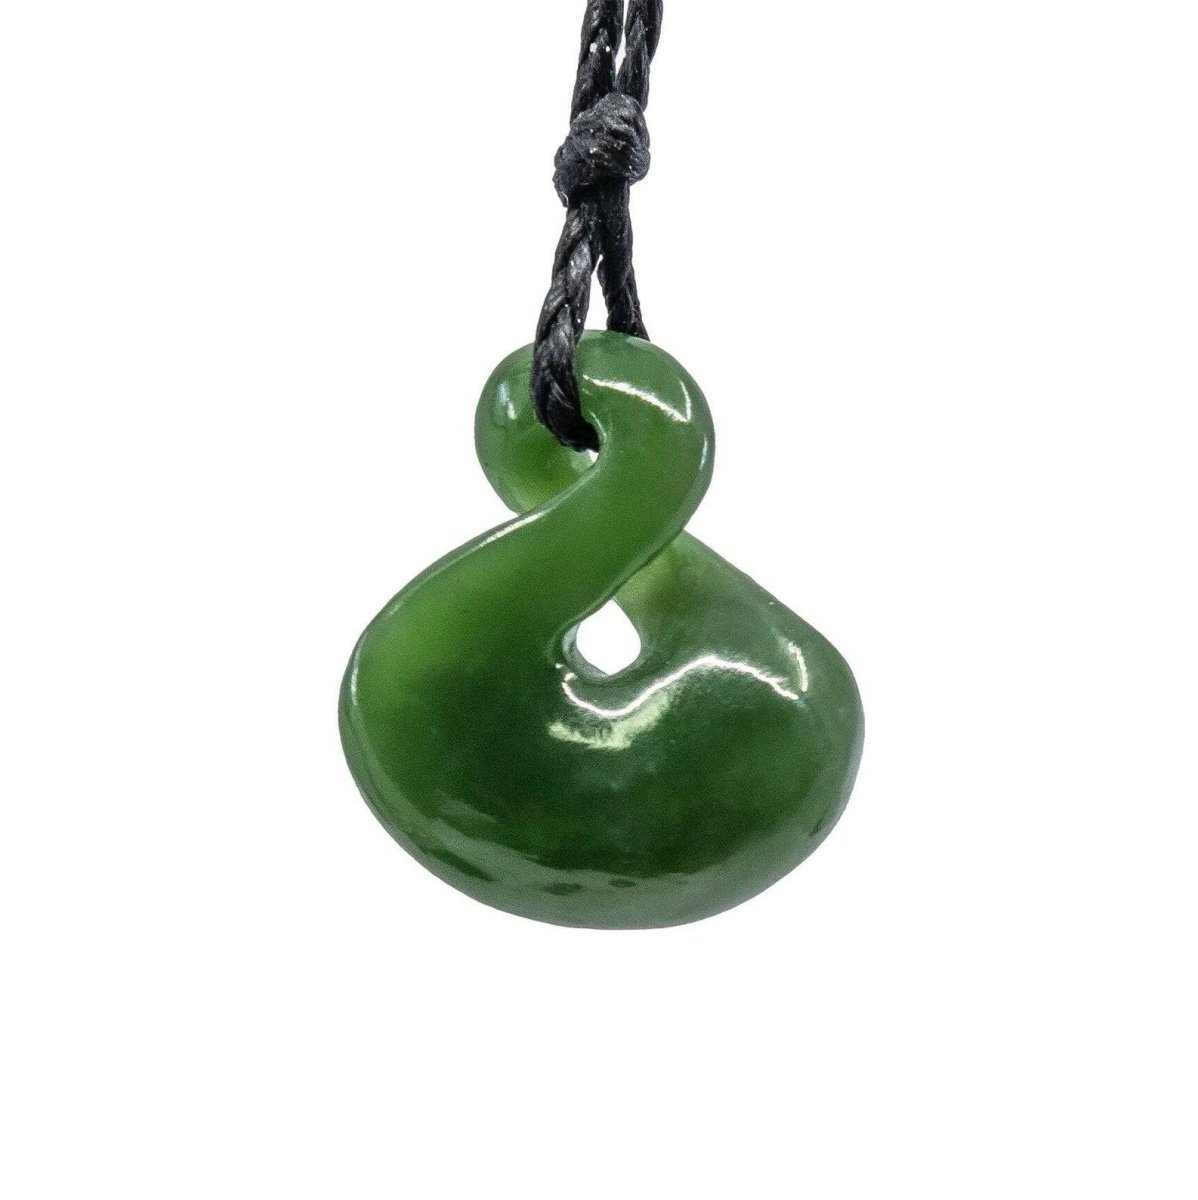 New Zealand Maori Inspired Greenstone Jade Infinity Symbol Necklace - Earthbound Pacific